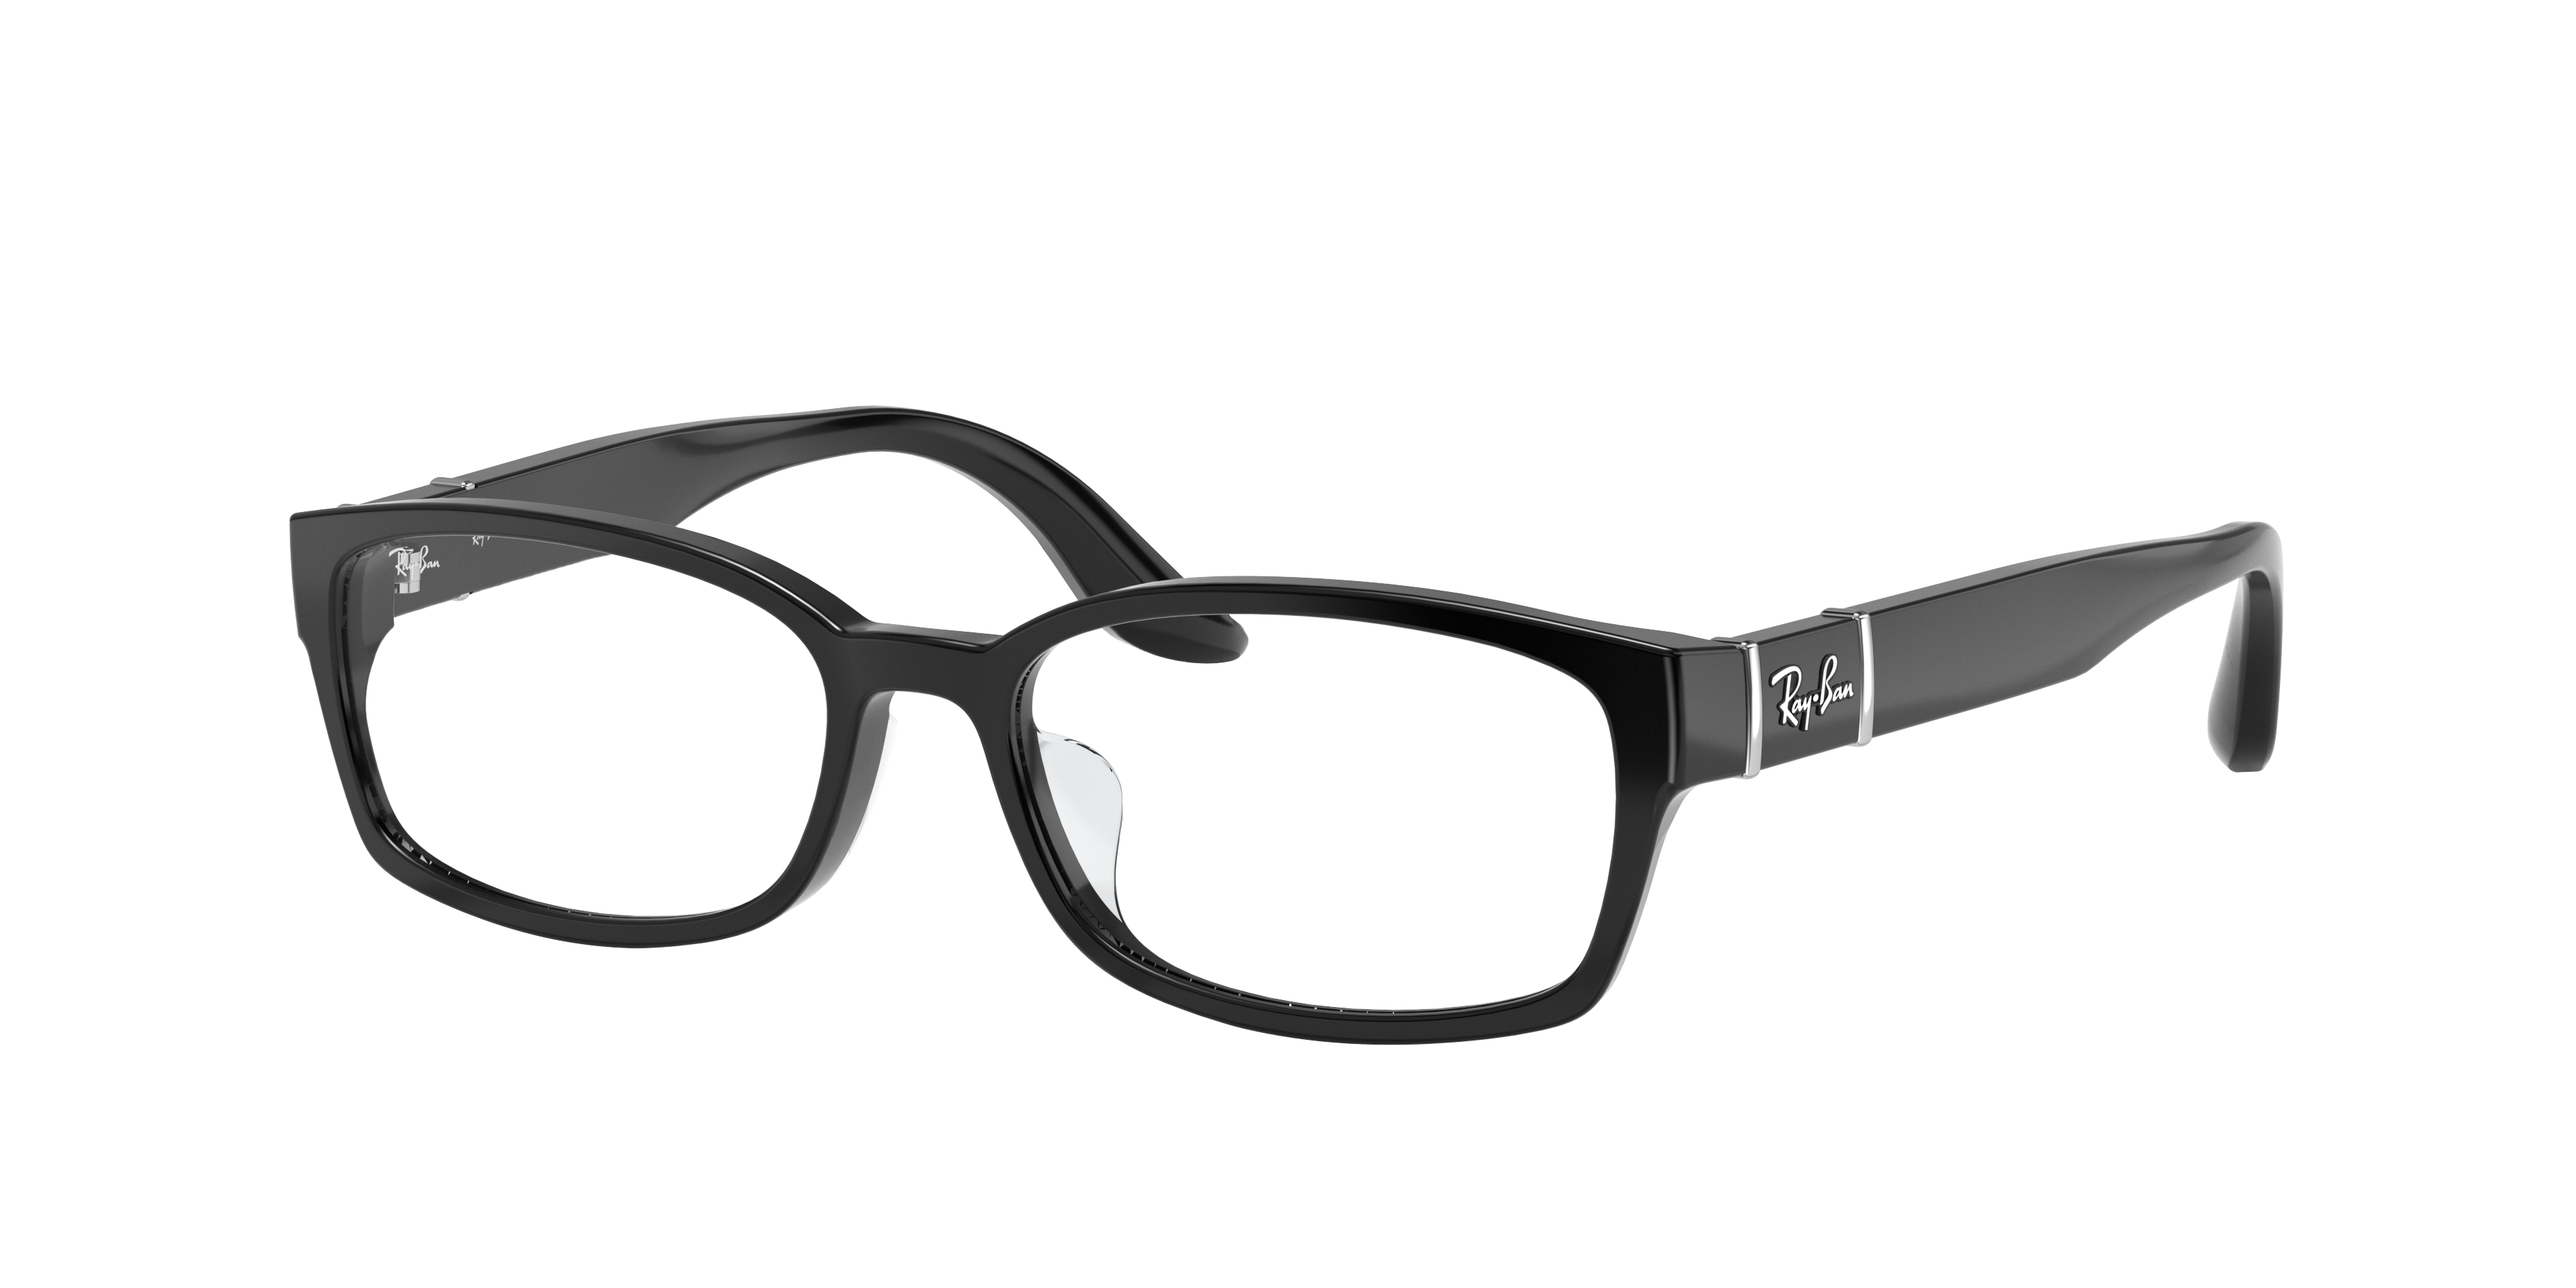 Rb5198 Optics Eyeglasses with Black Frame - RB5198 | Ray-Ban® US